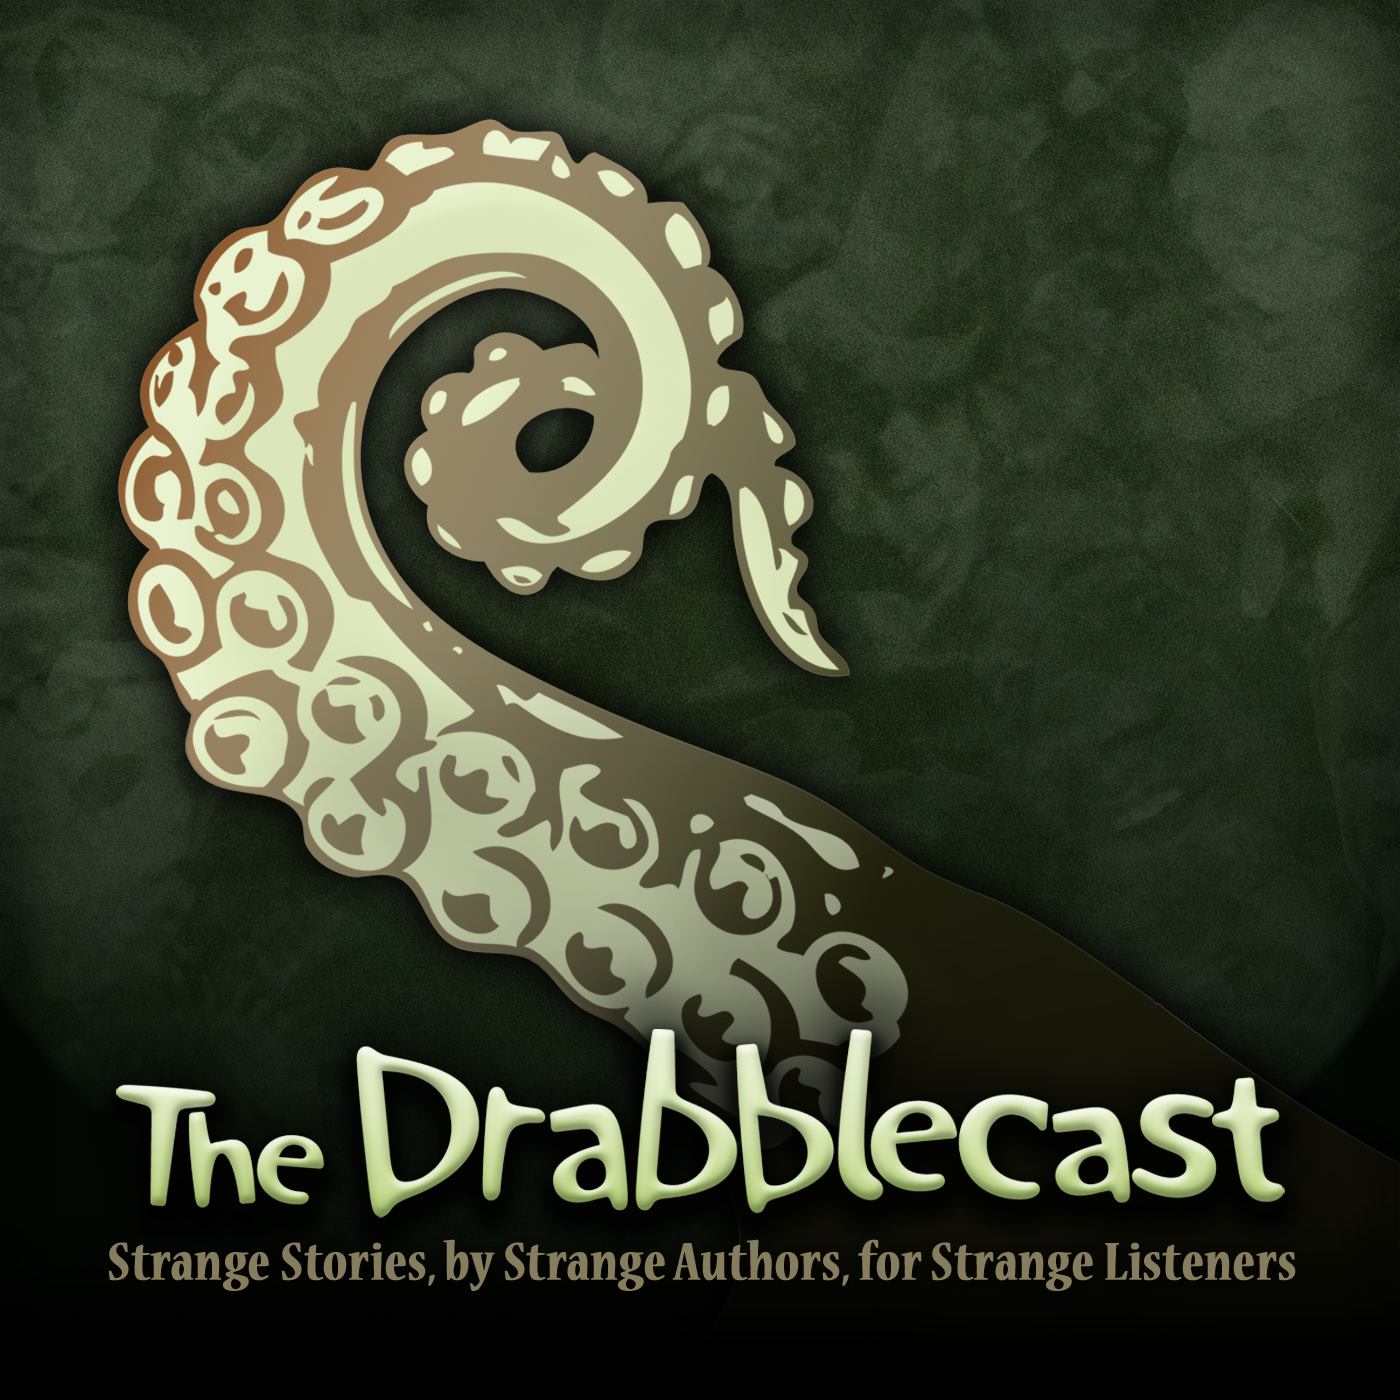 "The Drabblecast Audio Fiction Podcast MP3" Podcast